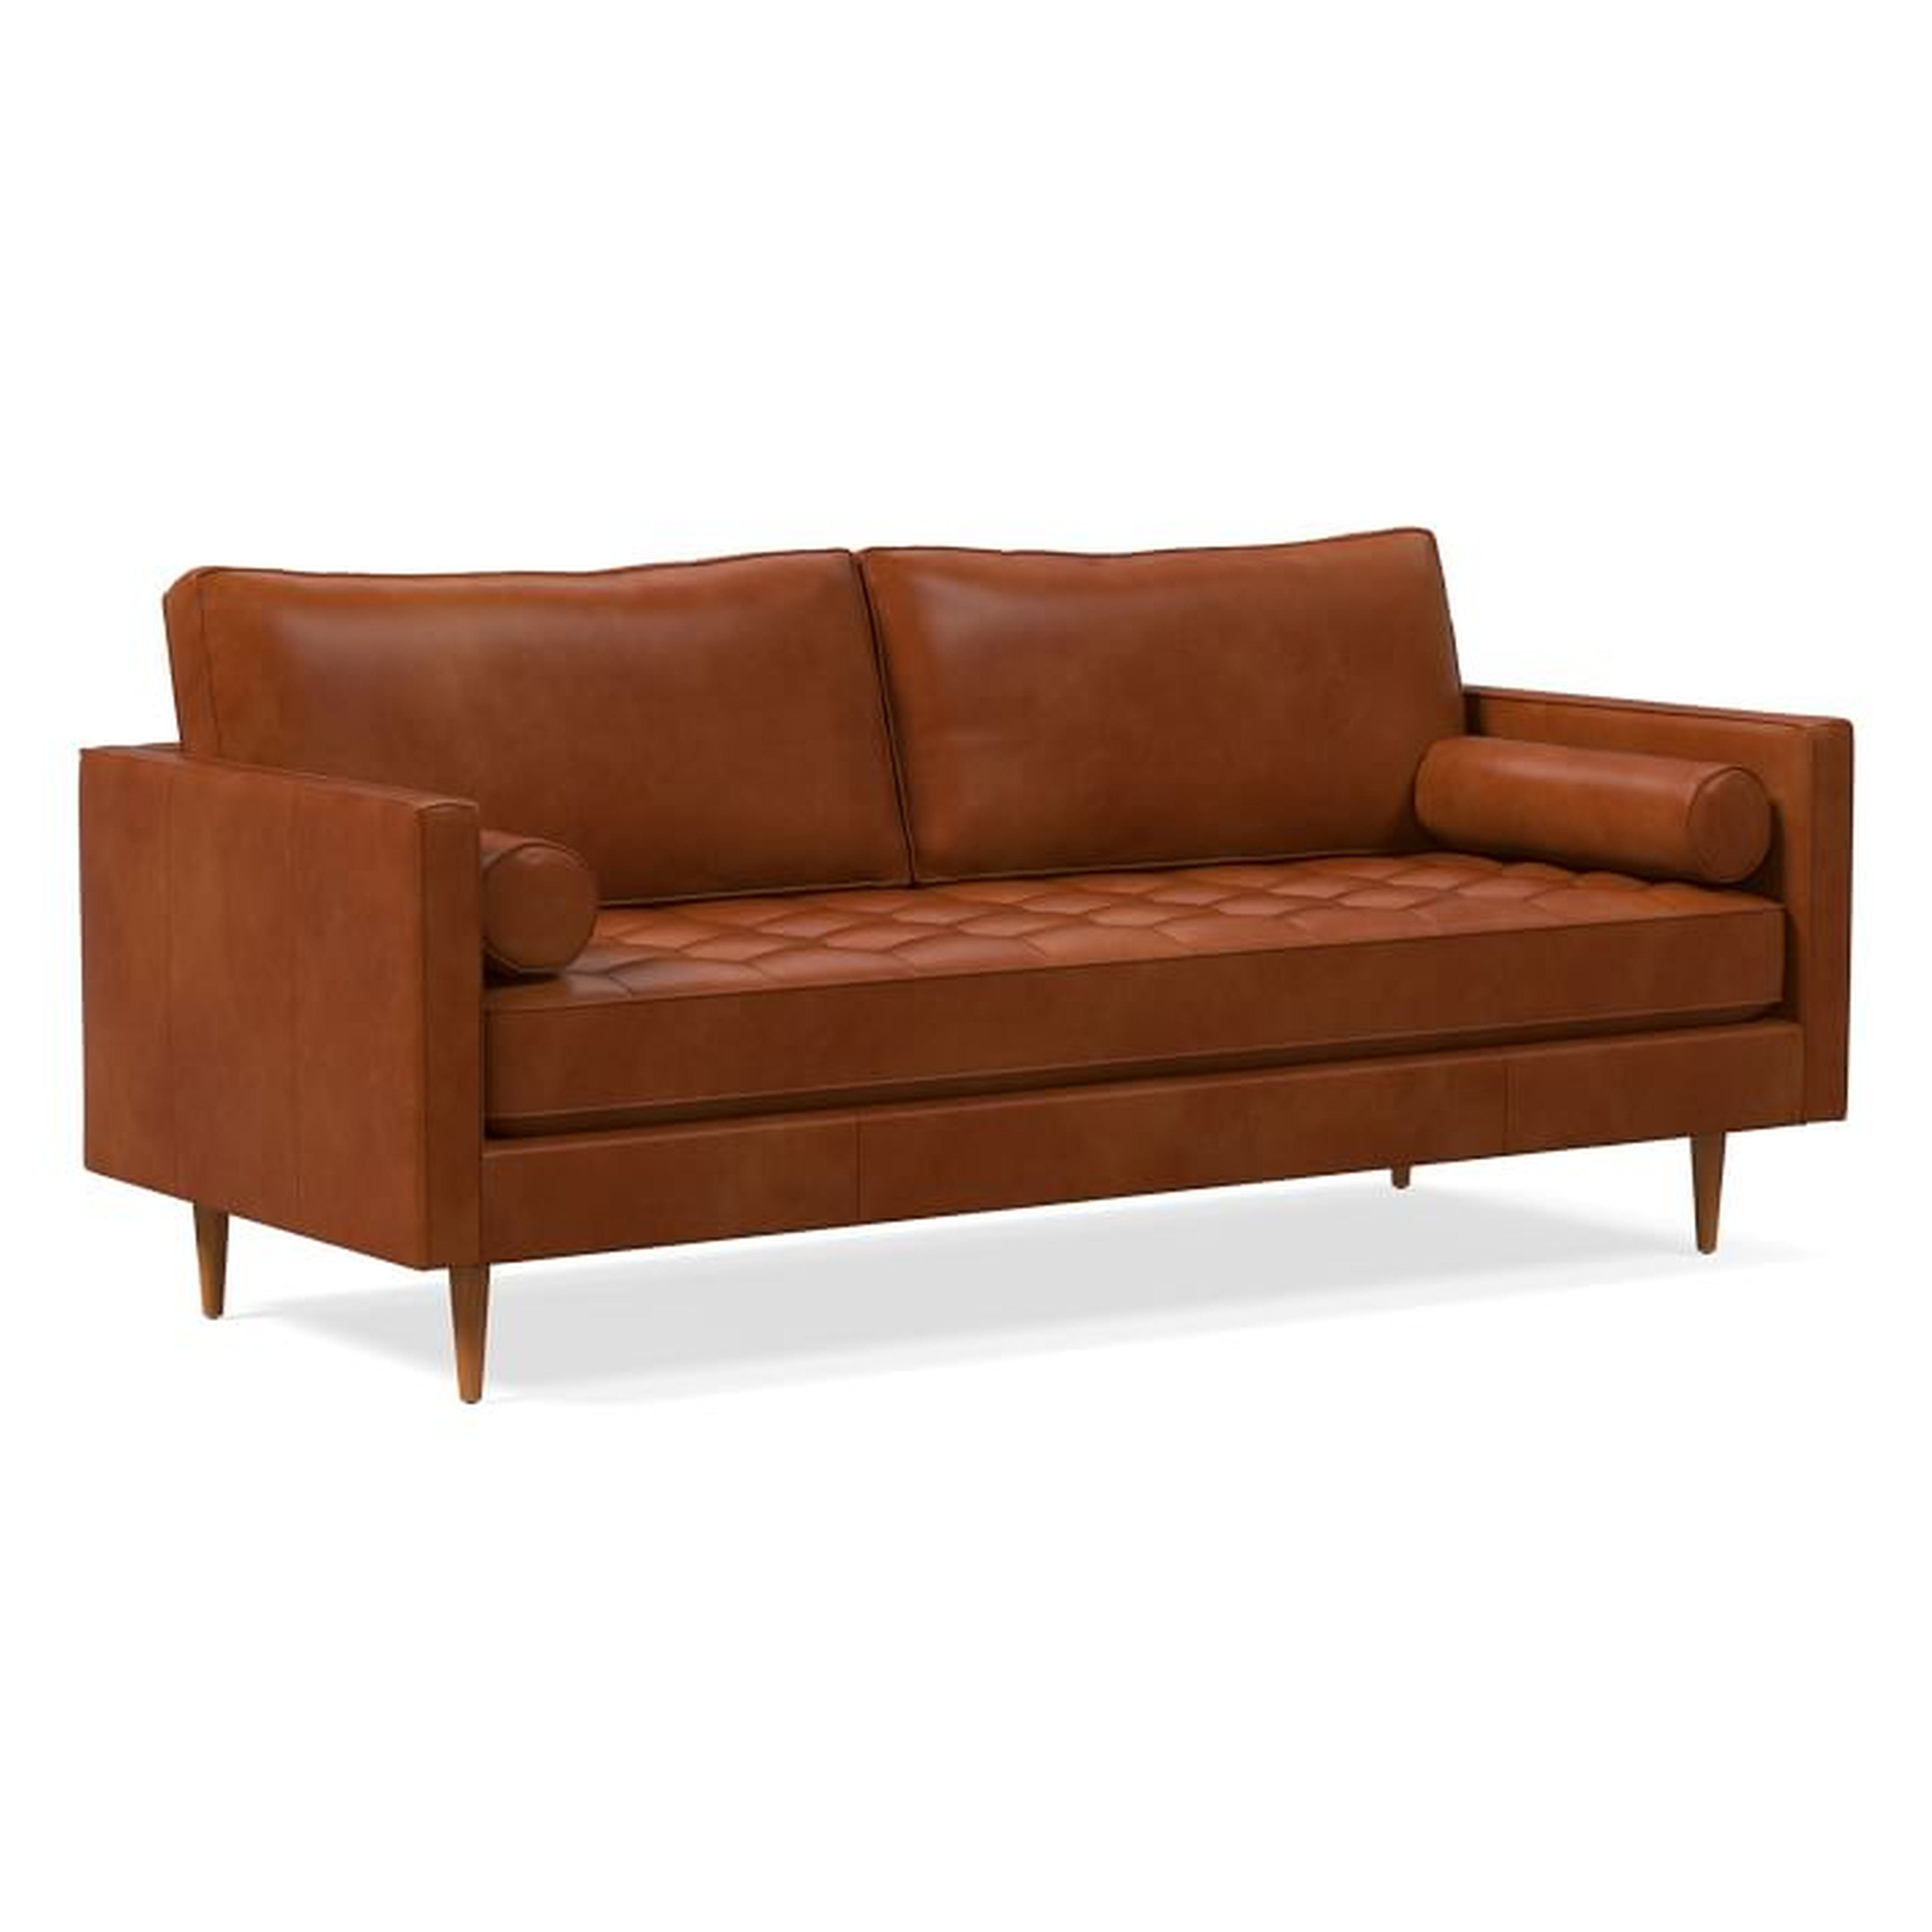 Monroe Mid-Century Tufted Seat Leather Sofa - West Elm